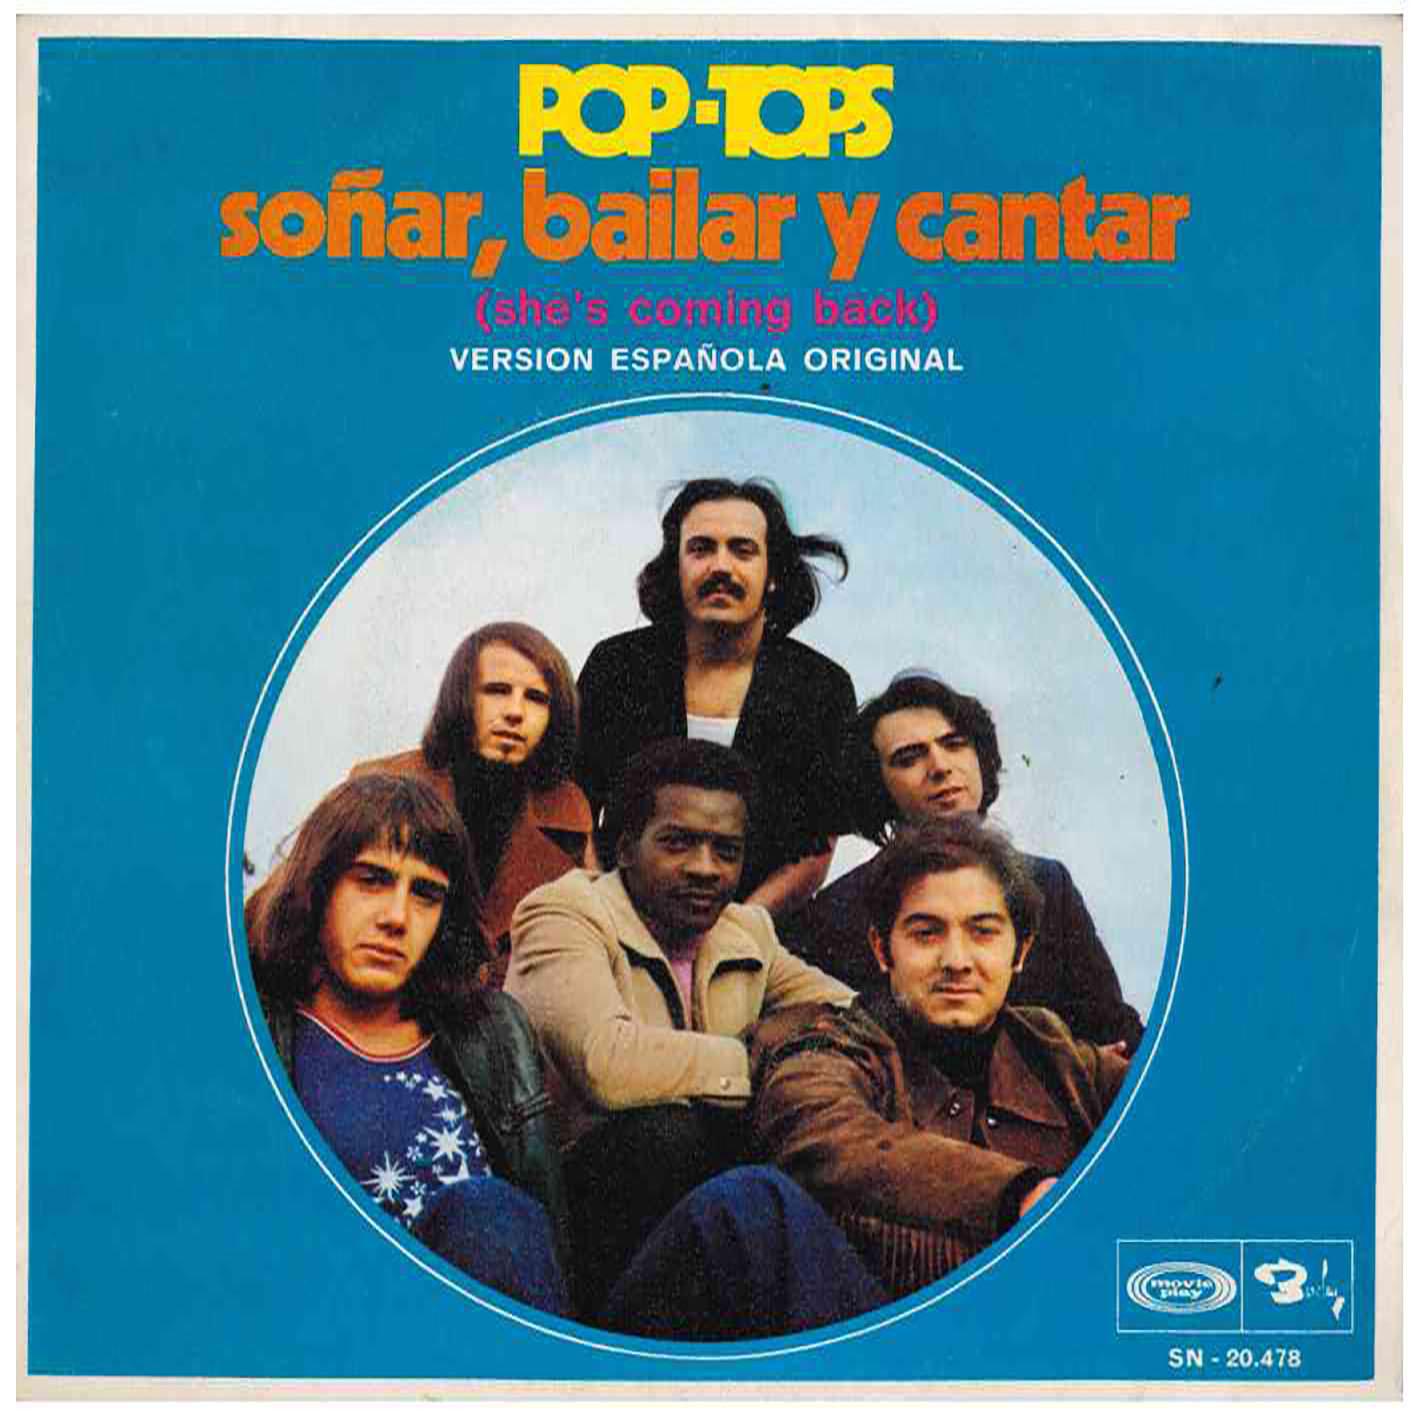 Pop-Tops – Soñar, Bailar Y Cantar